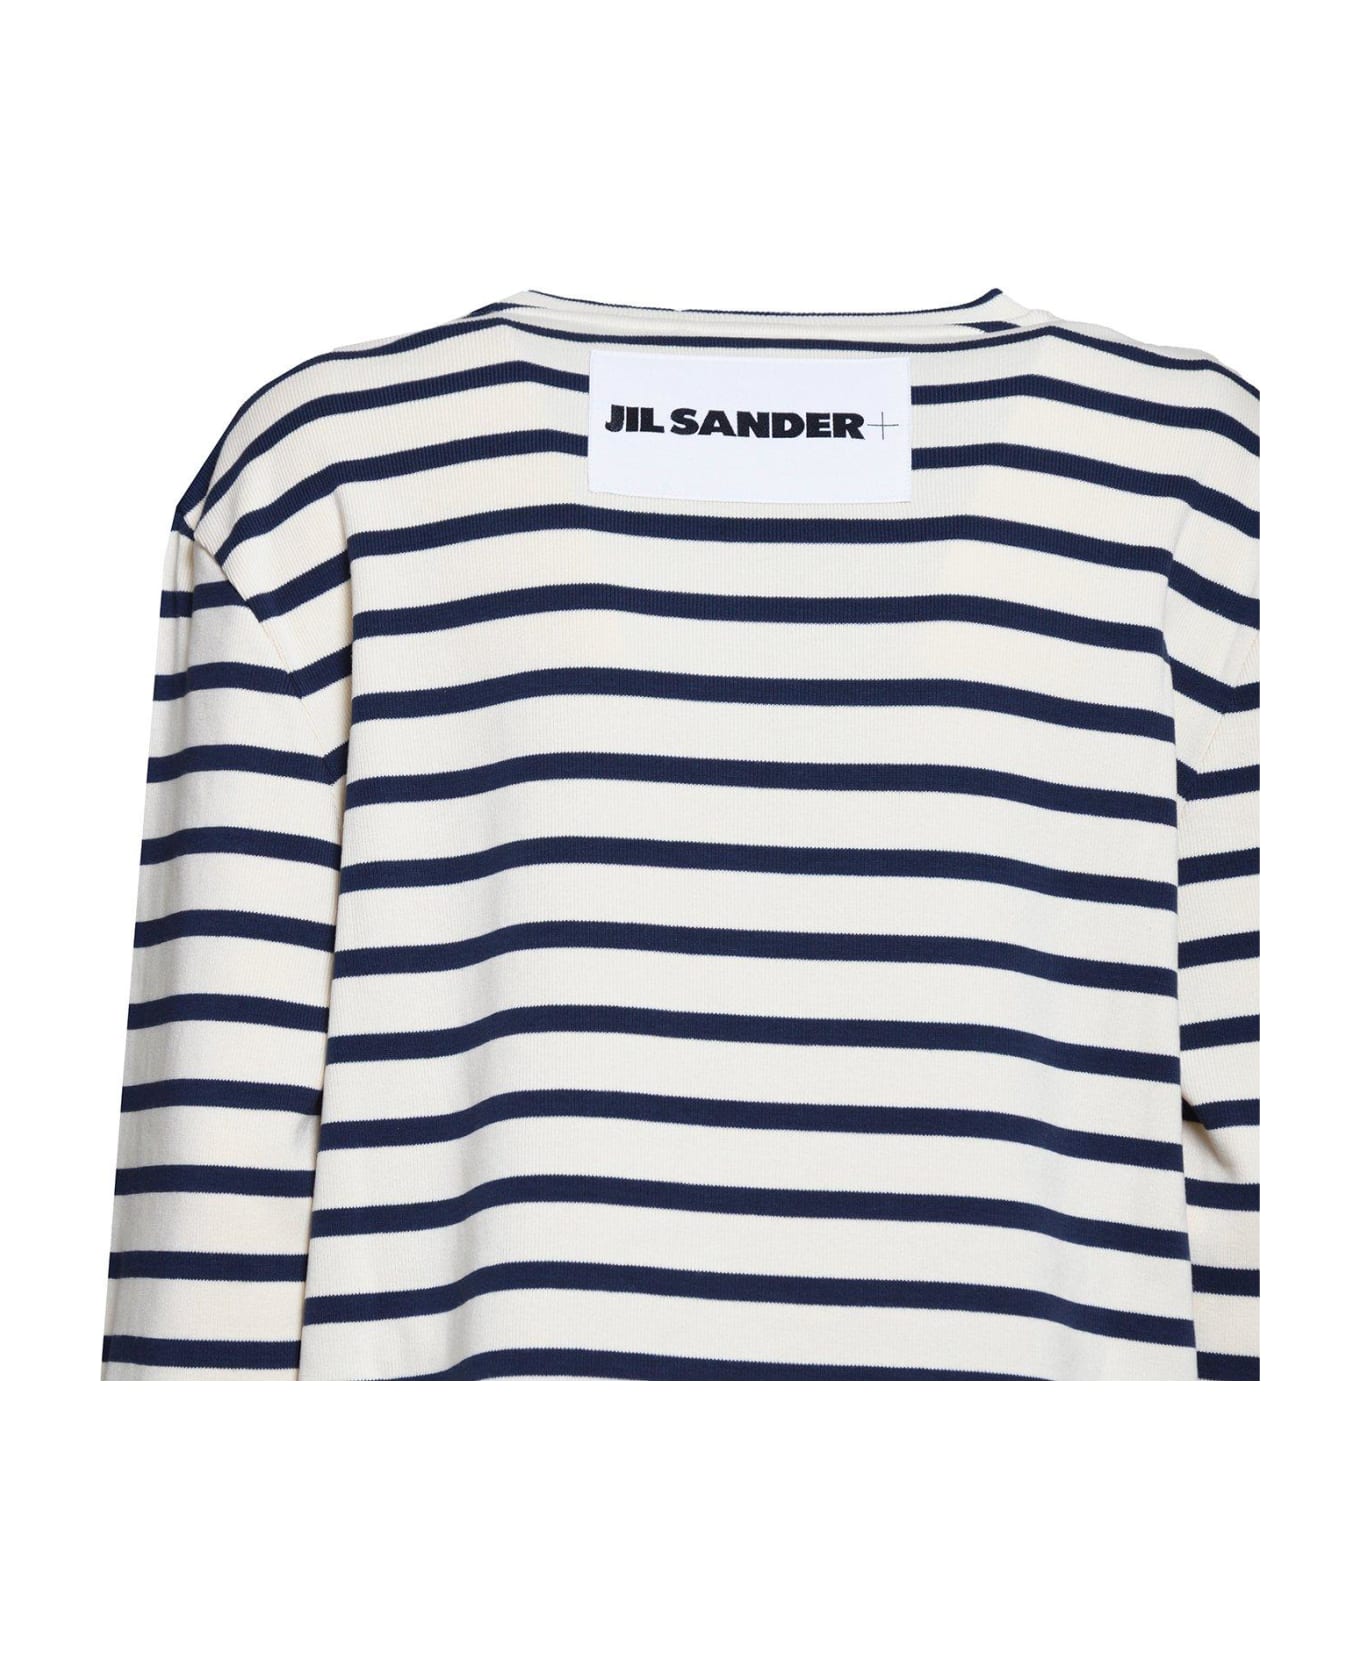 Jil Sander + Striped Crewneck Sweatshirt - BLUE STRIPE